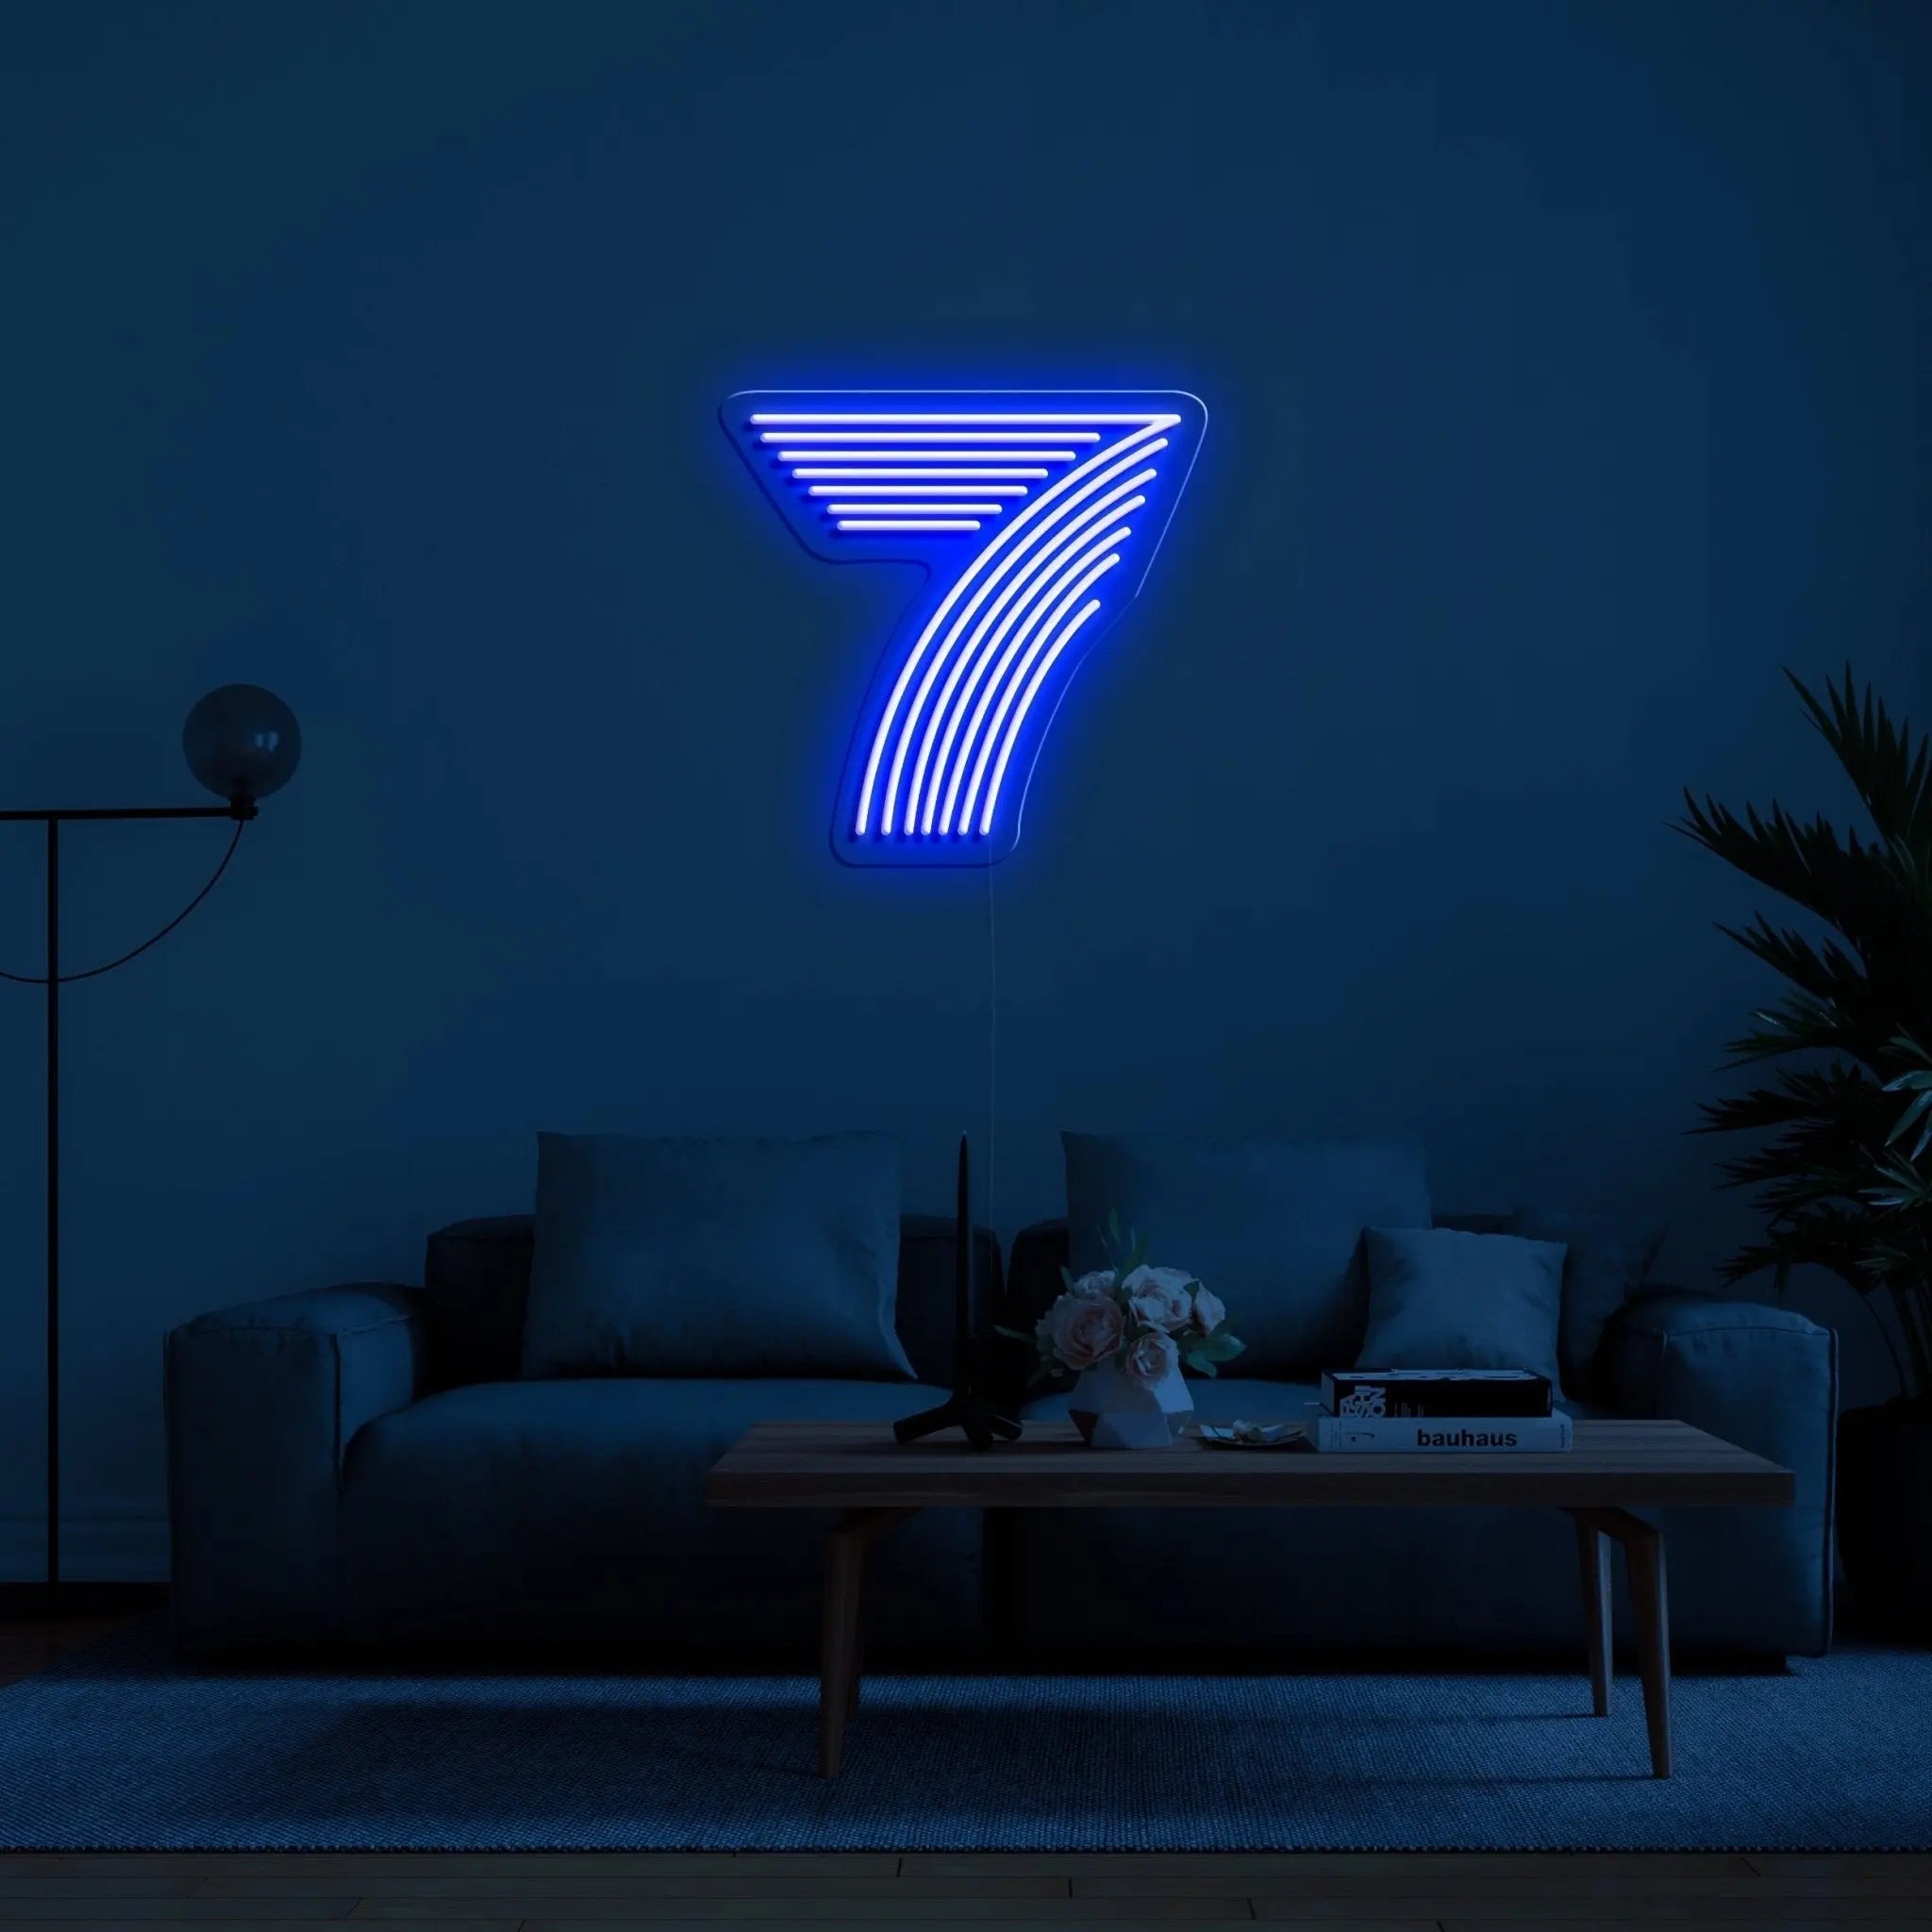 '7' Neon Sign - neonaffair